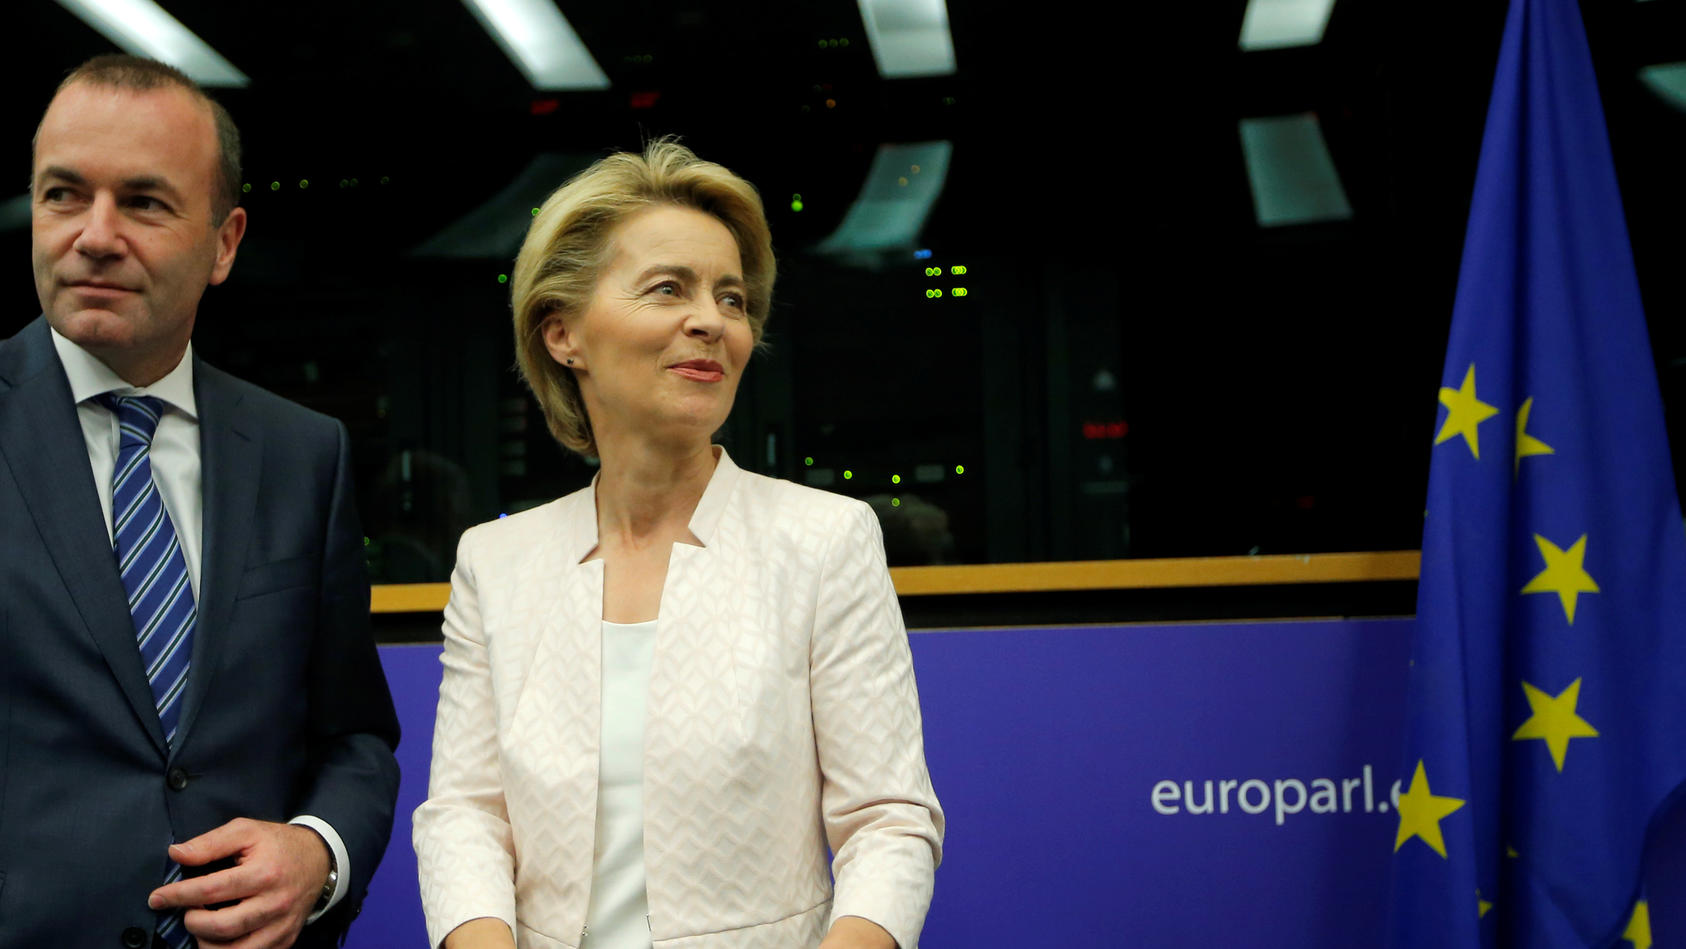 German Defense Minister Ursula von der Leyen, who has been nominated as European Commission President, arrives at the European Parliament in Strasbourg